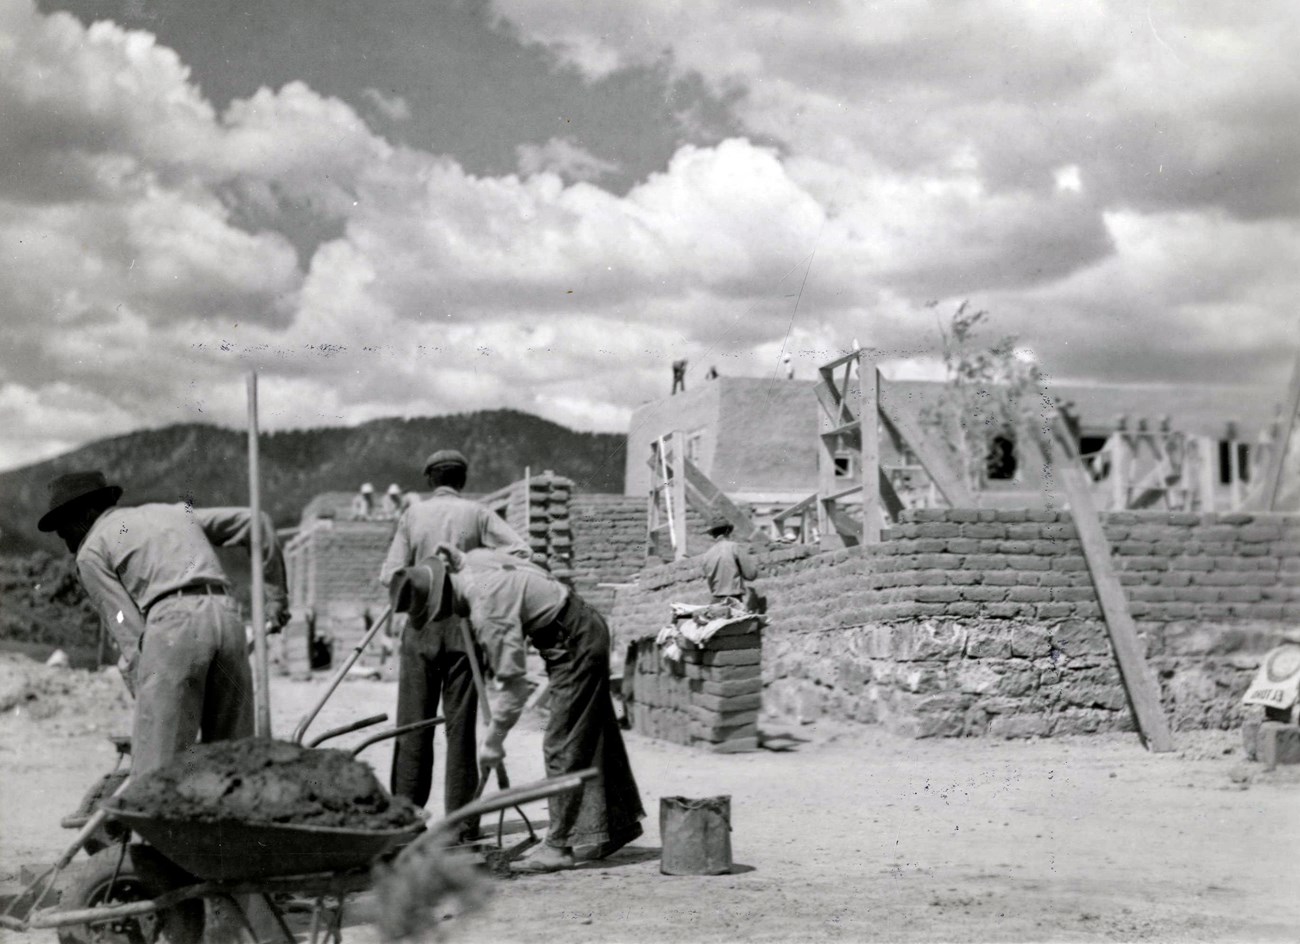 CCC men constructing adobe bricks for building construction